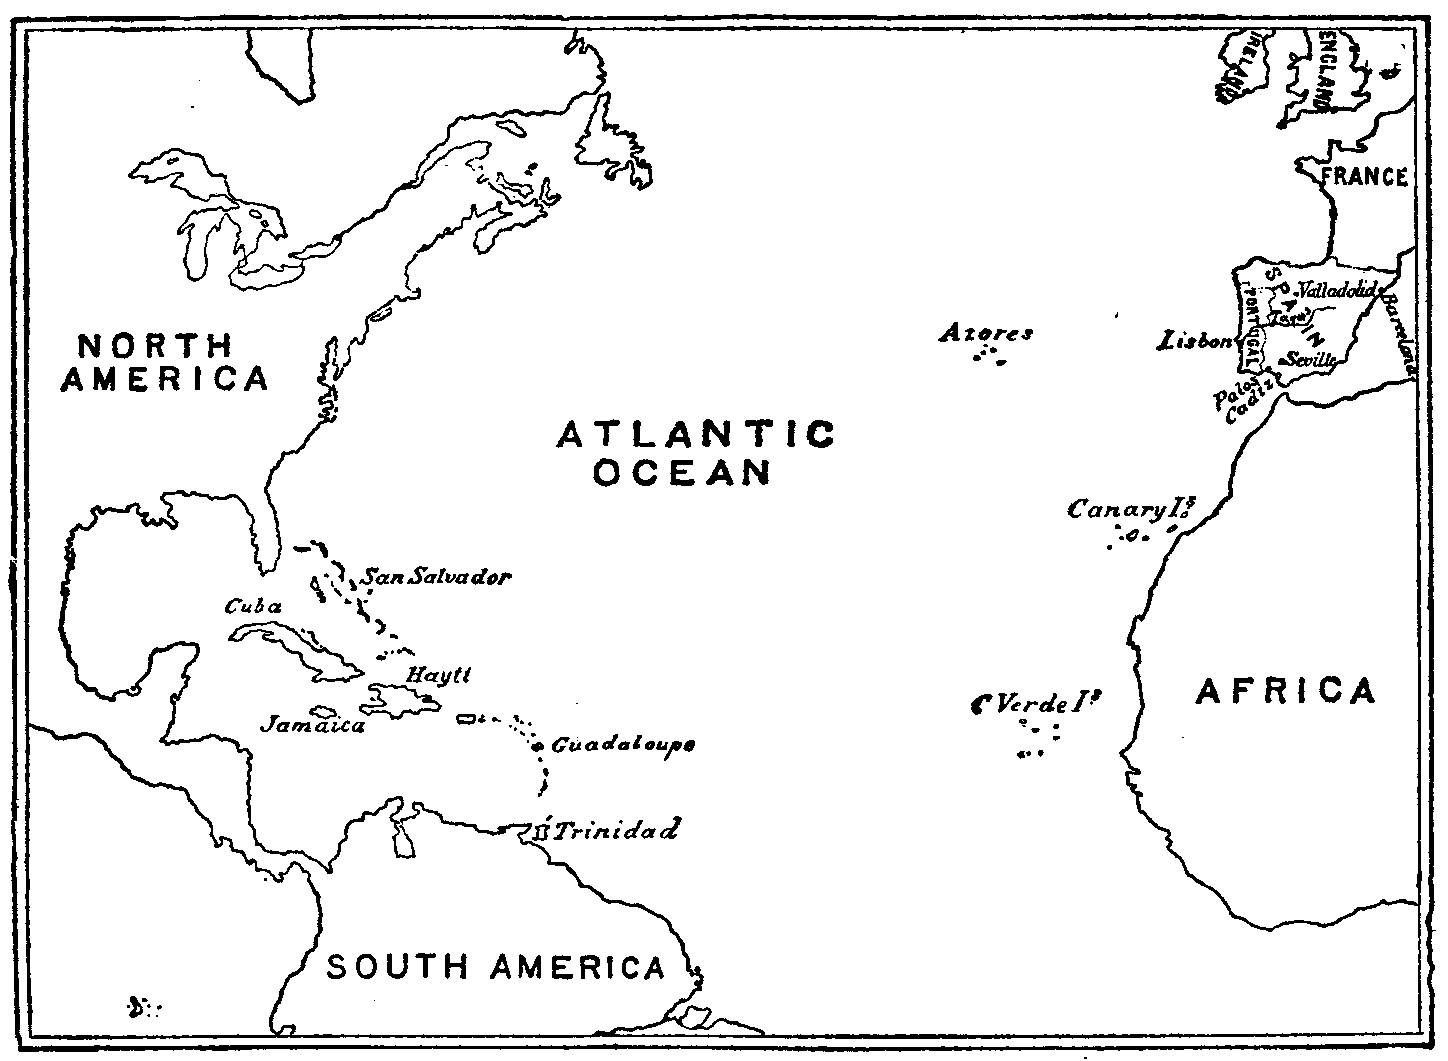 Ocean atlantic ocean